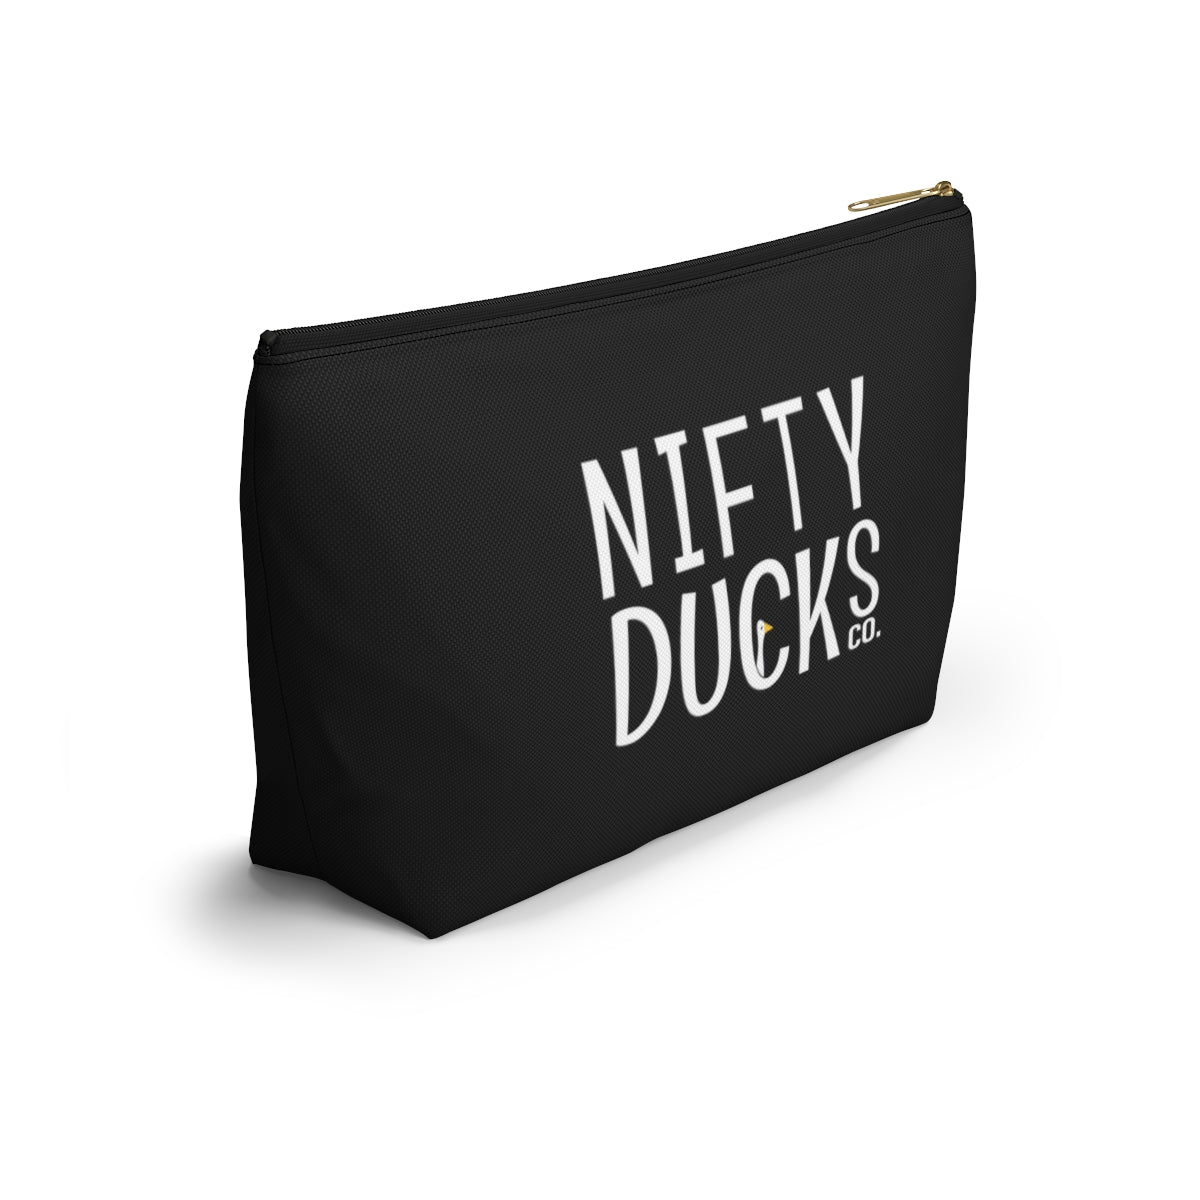 Nifty Ducks Co. Logo2 - black - Accessory Pouch w T-bottom